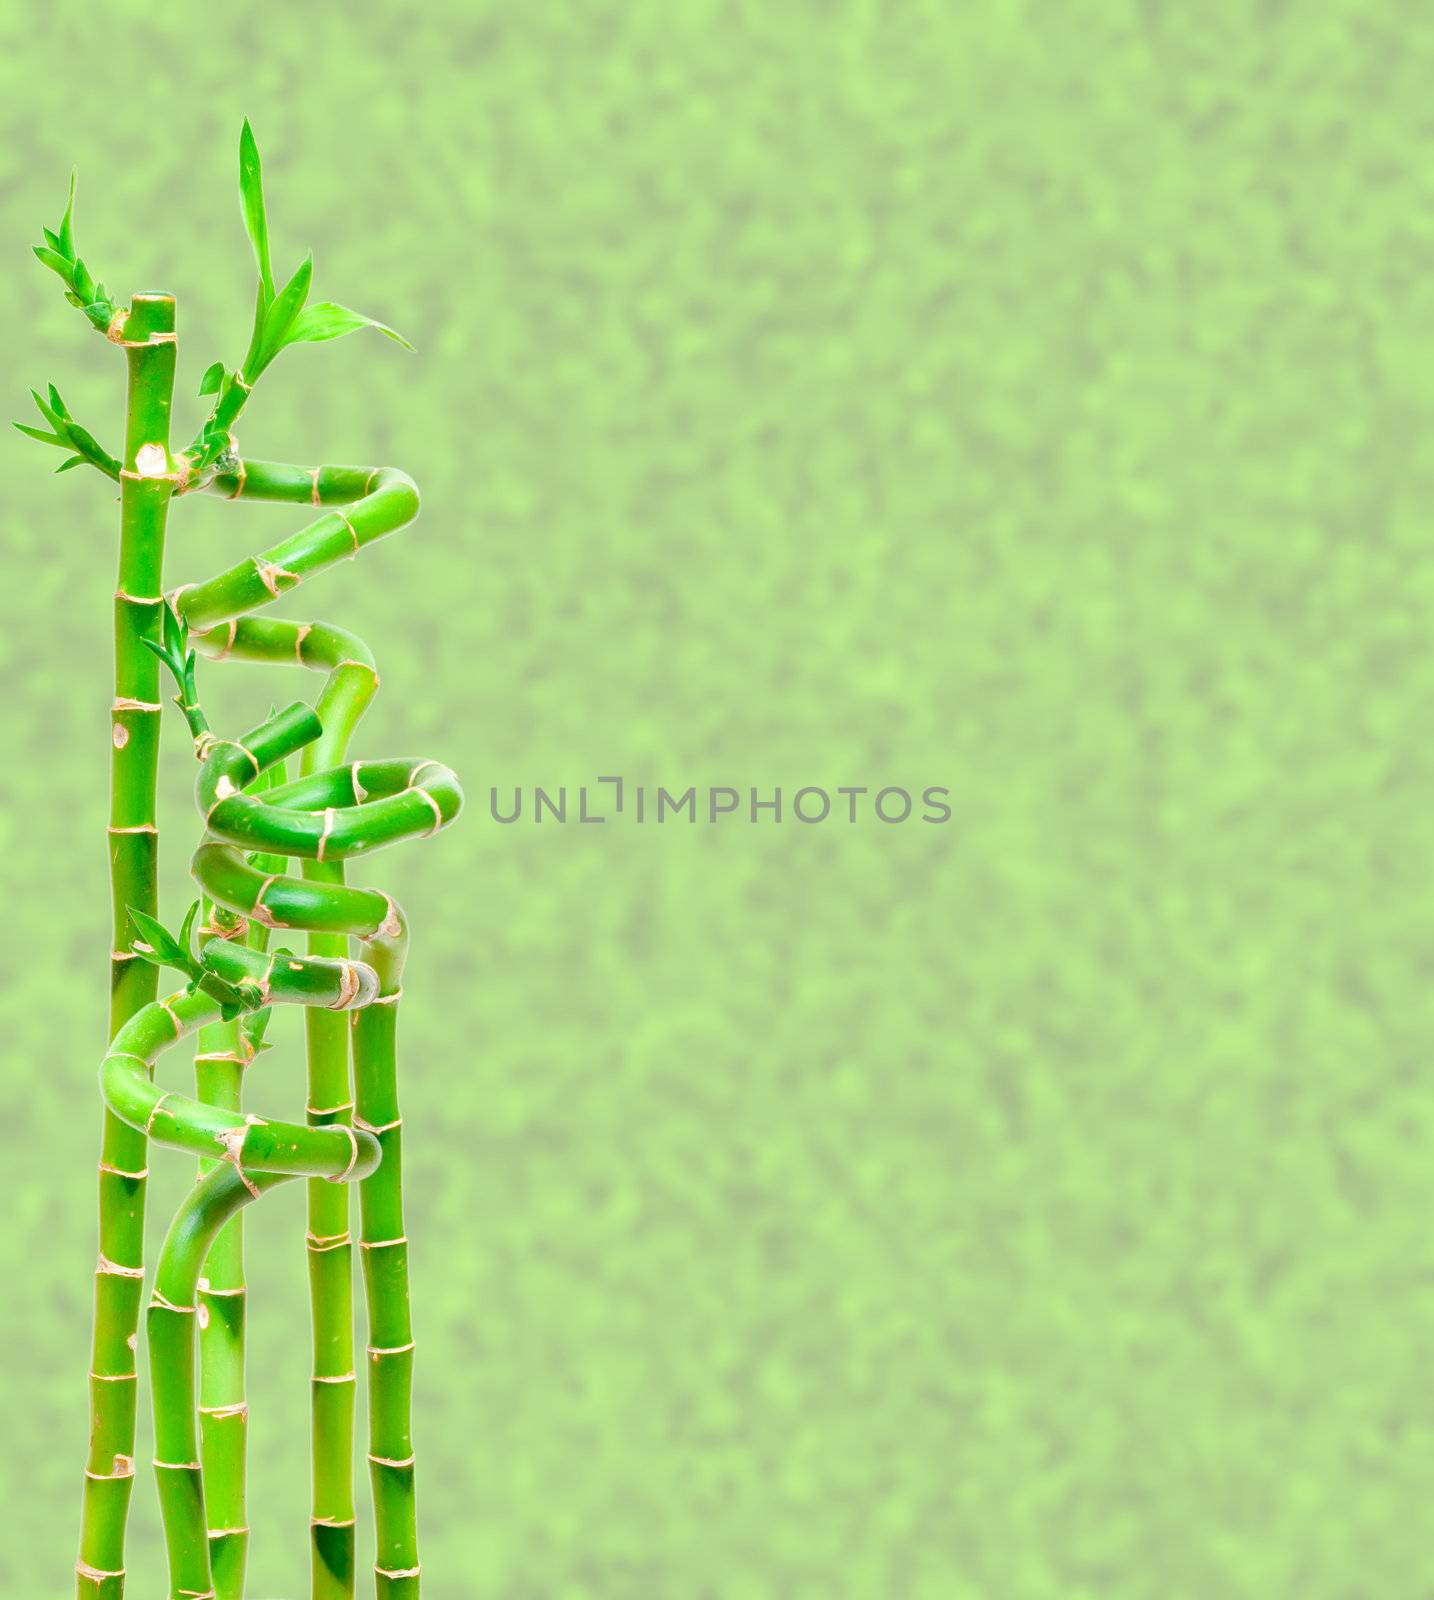 Lucky Bamboo Plant (Dracaena sanderiana) by Discovod